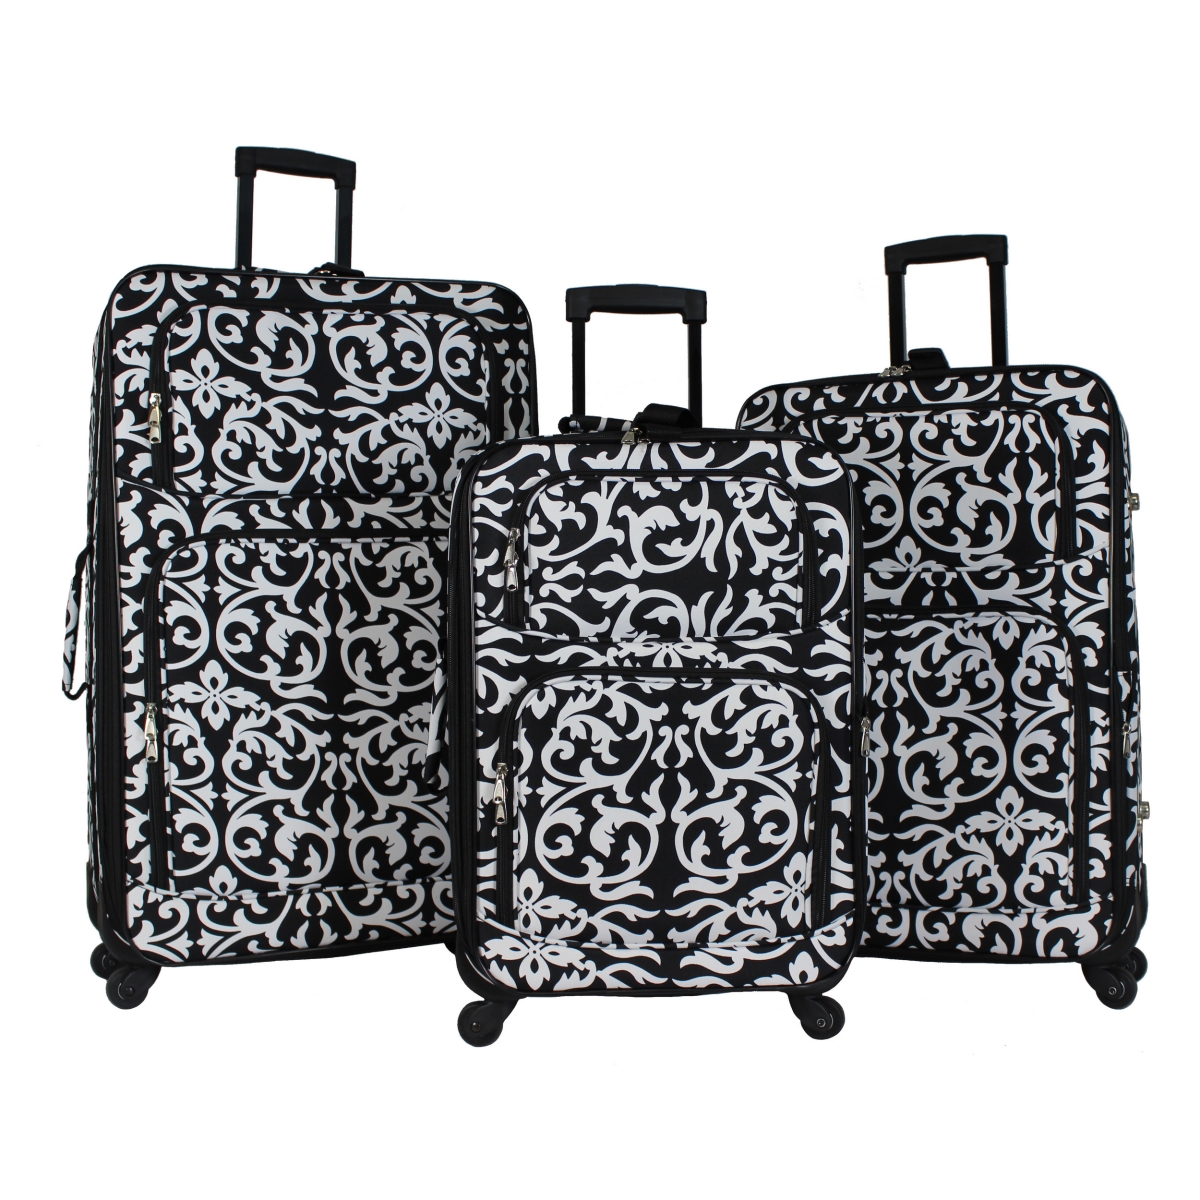 818703-501-b Rolling Expandable Spinner Luggage Set - Black Trim Damask, 3 Piece